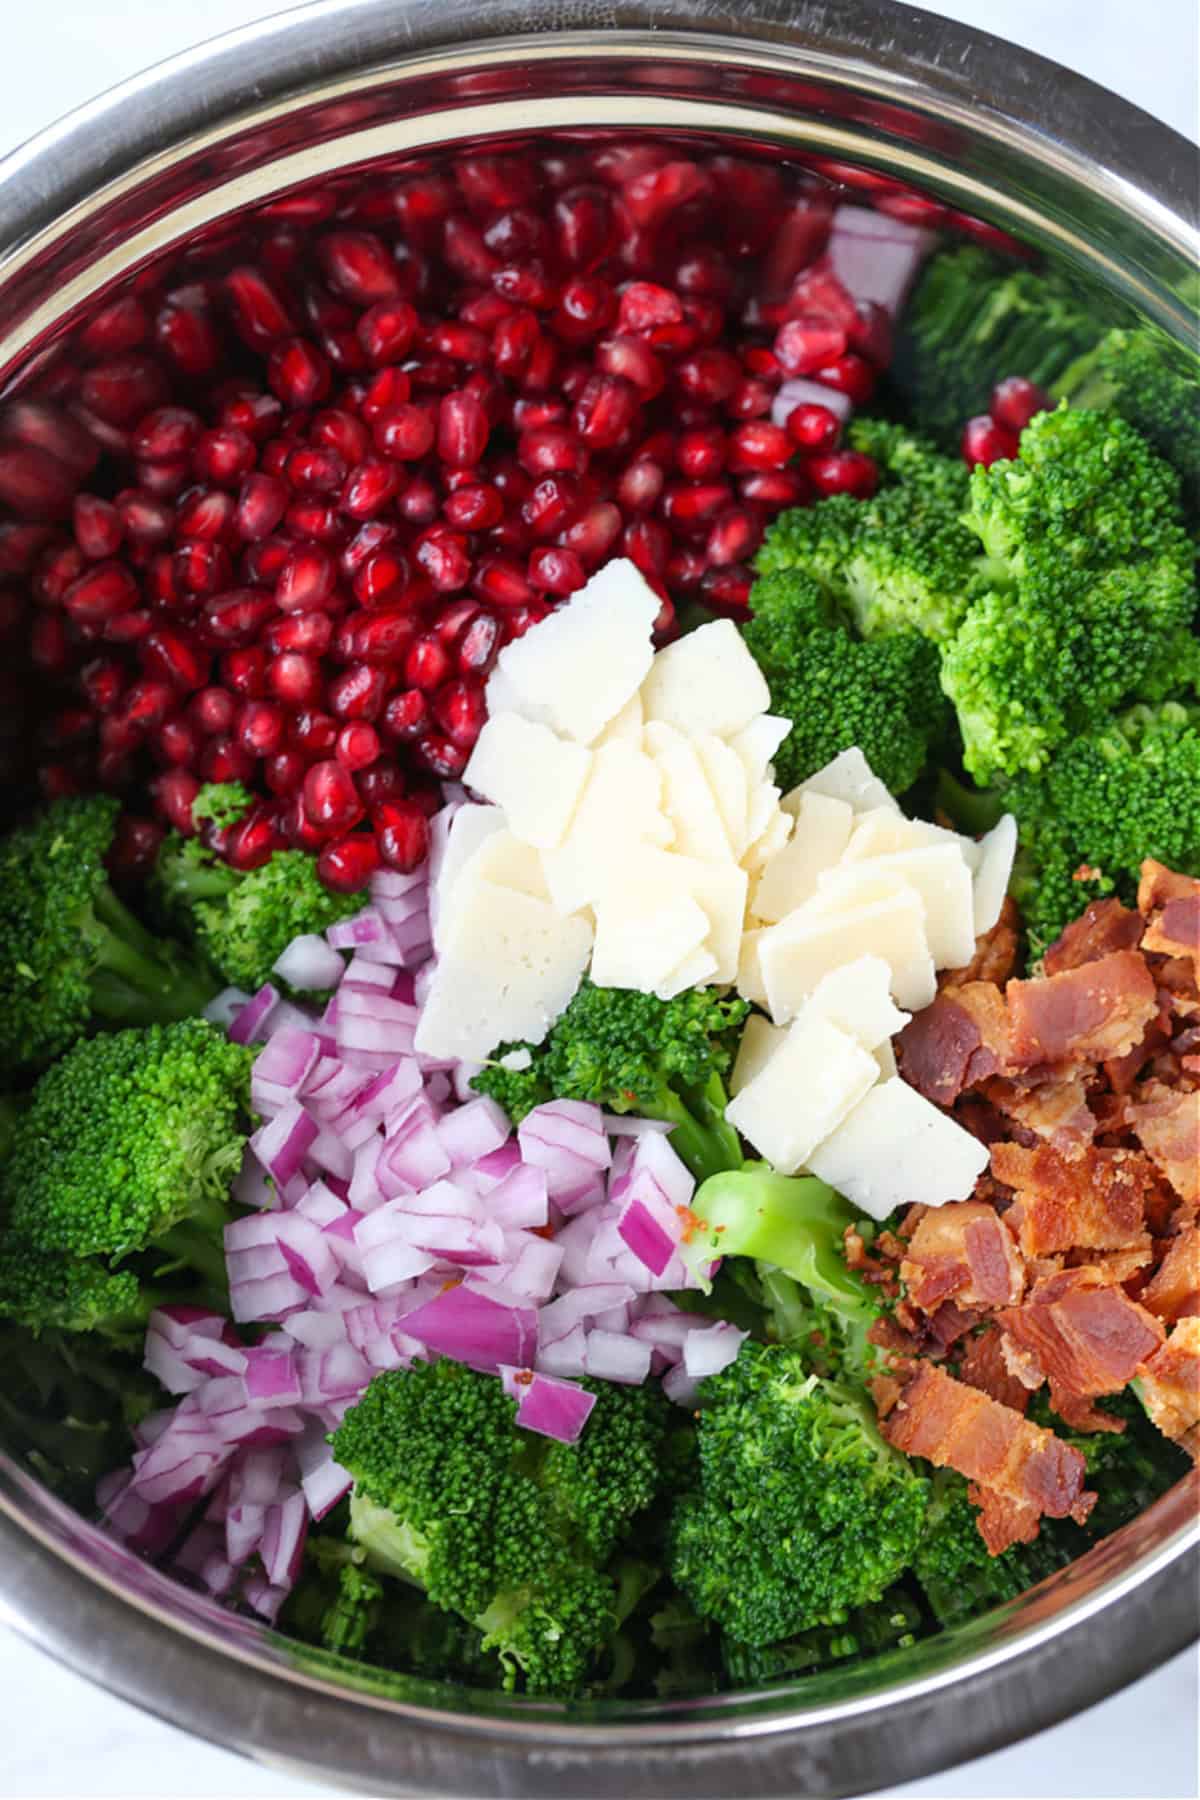 ingredients for making no-mayo broccoli salad